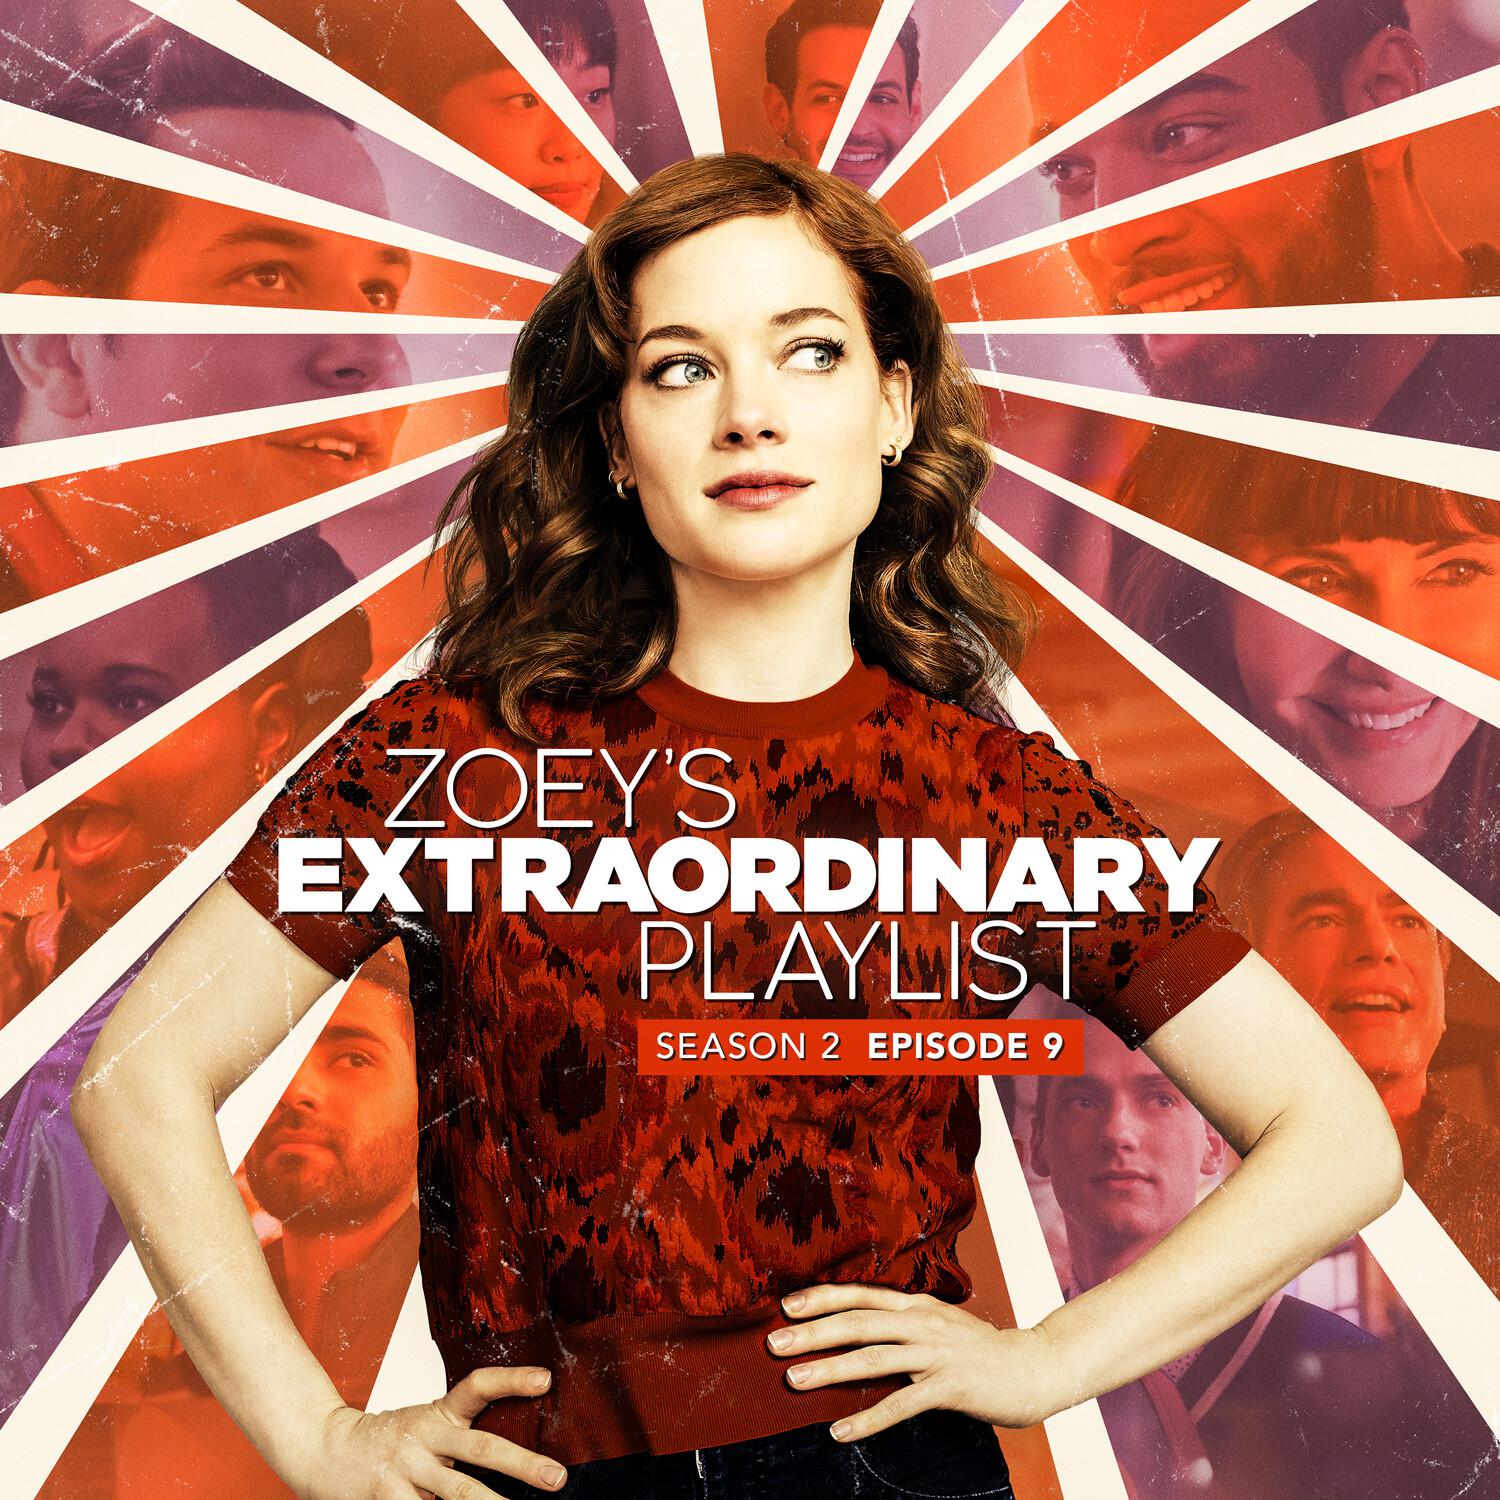 Cast of Zoey’s Extraordinary Playlist - The Fox